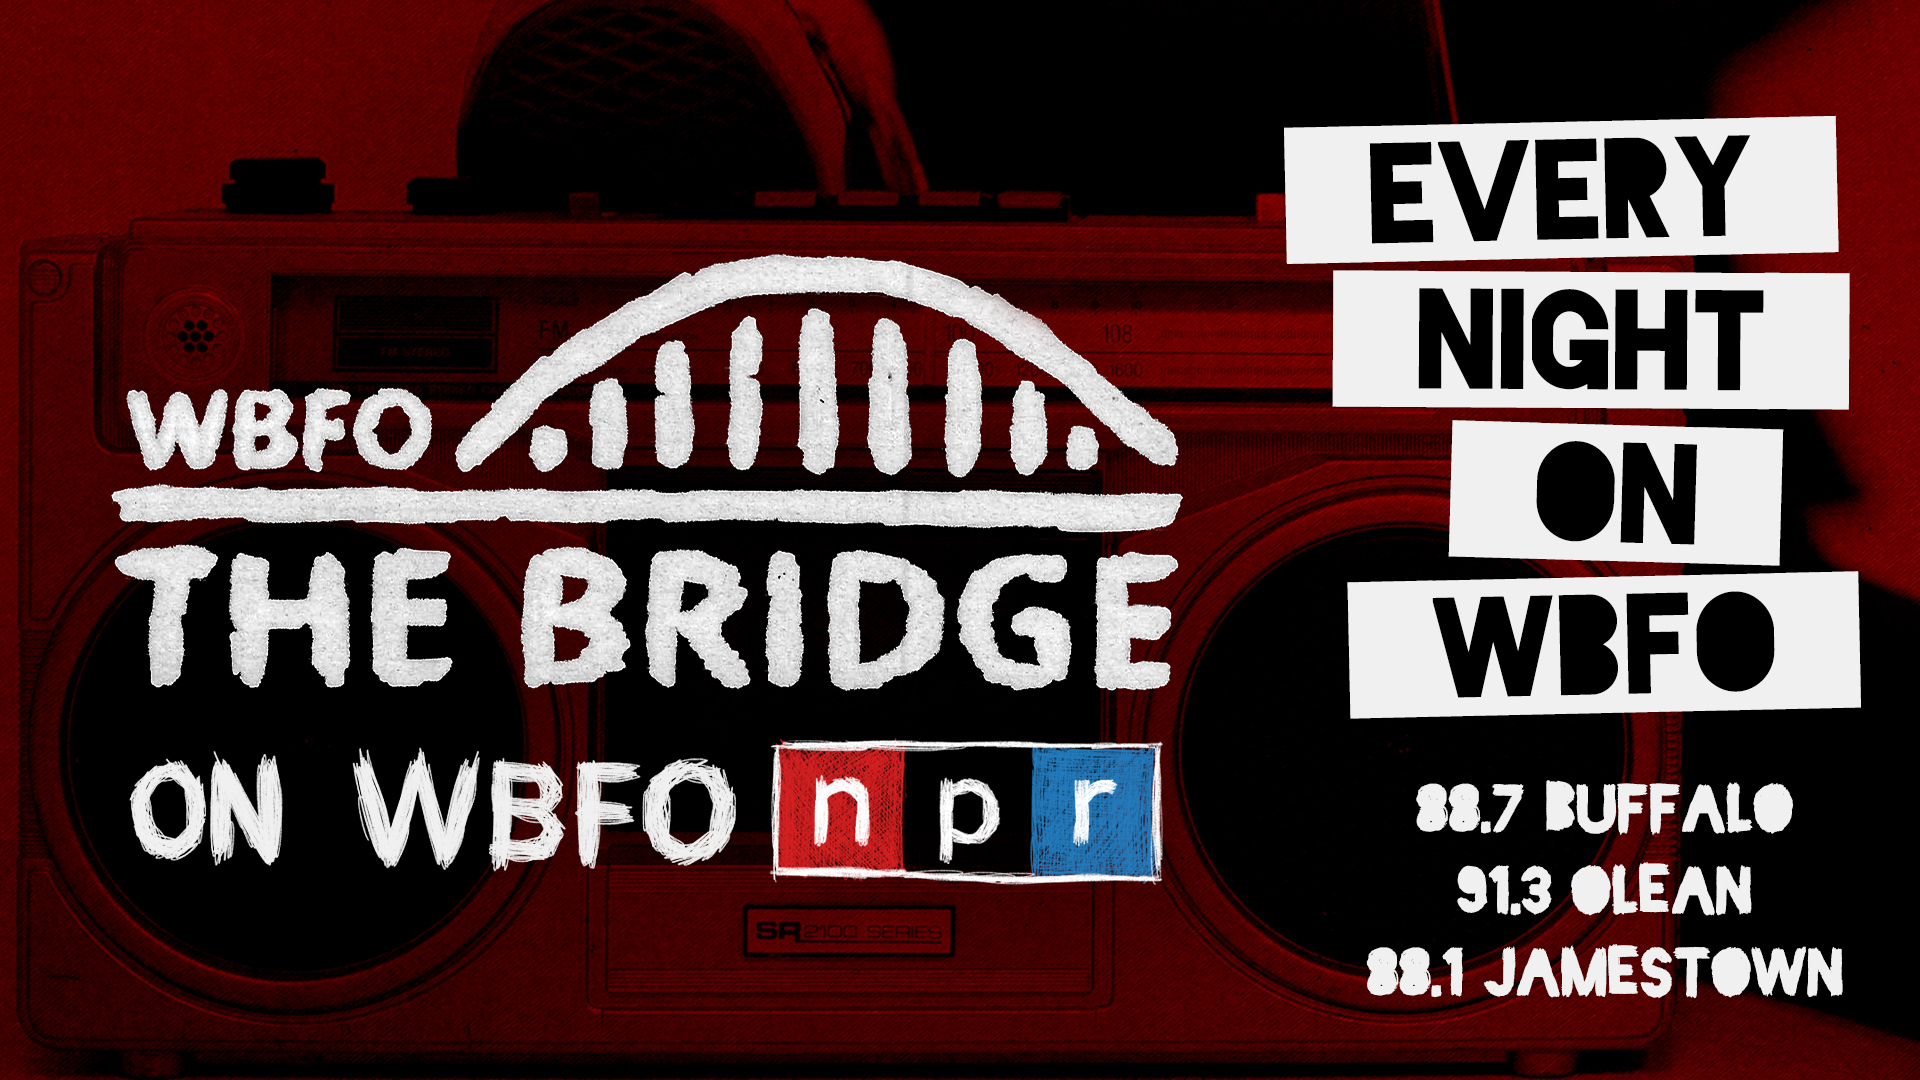 "WBFO The Bridge" (logo) on WBFO "NPR" (logo), every night on WBFO